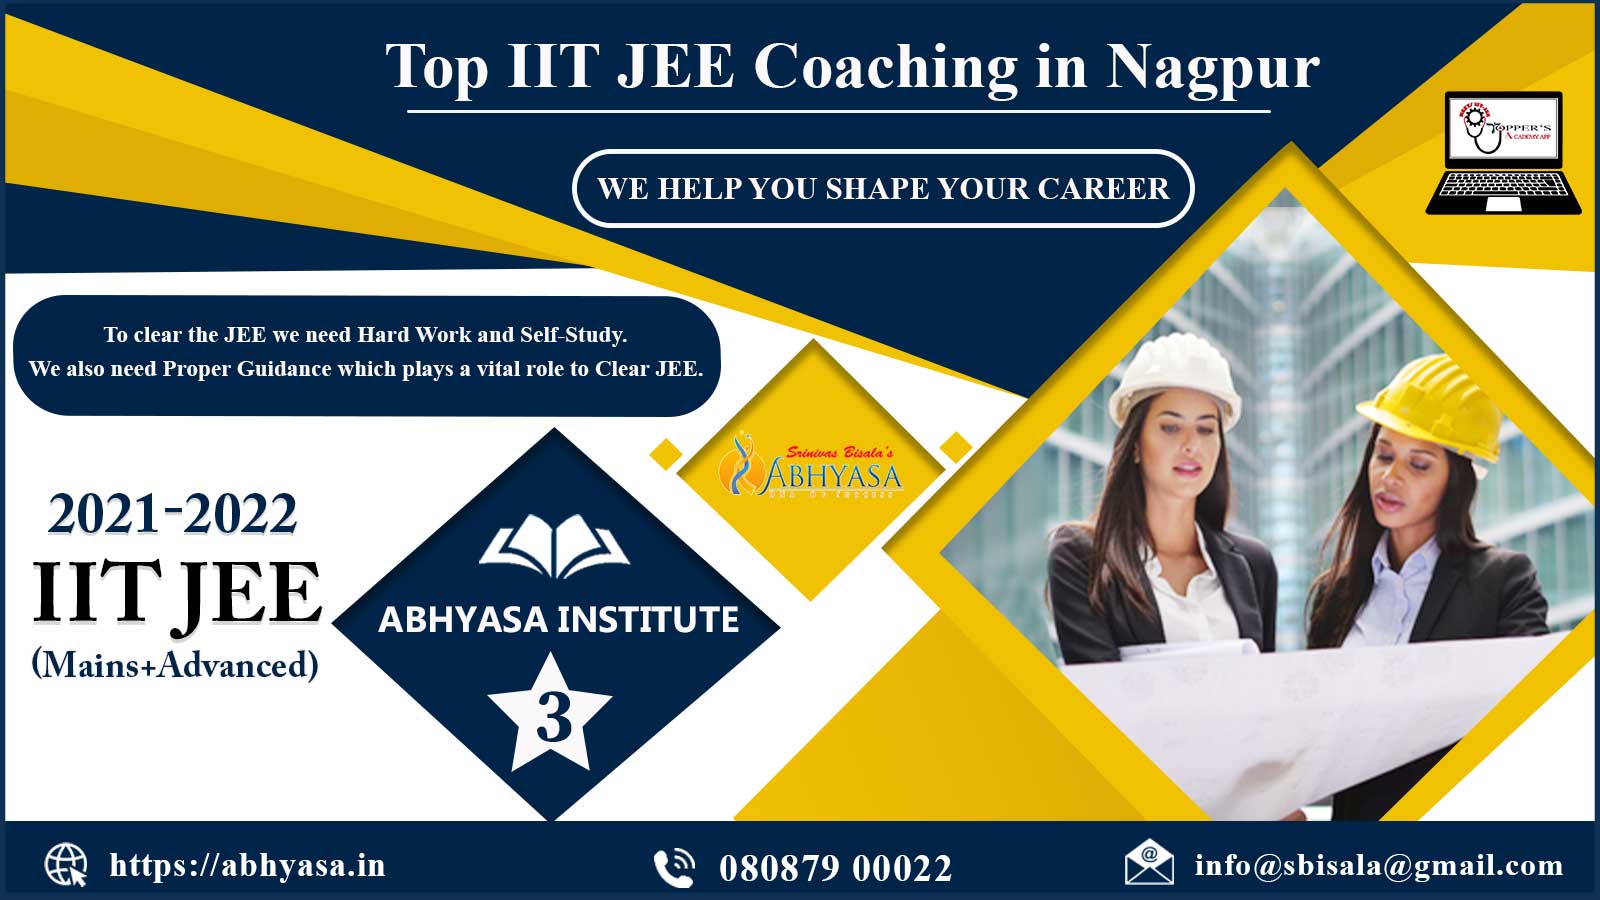 Top IIT JEE Coaching Academy In Nagpur